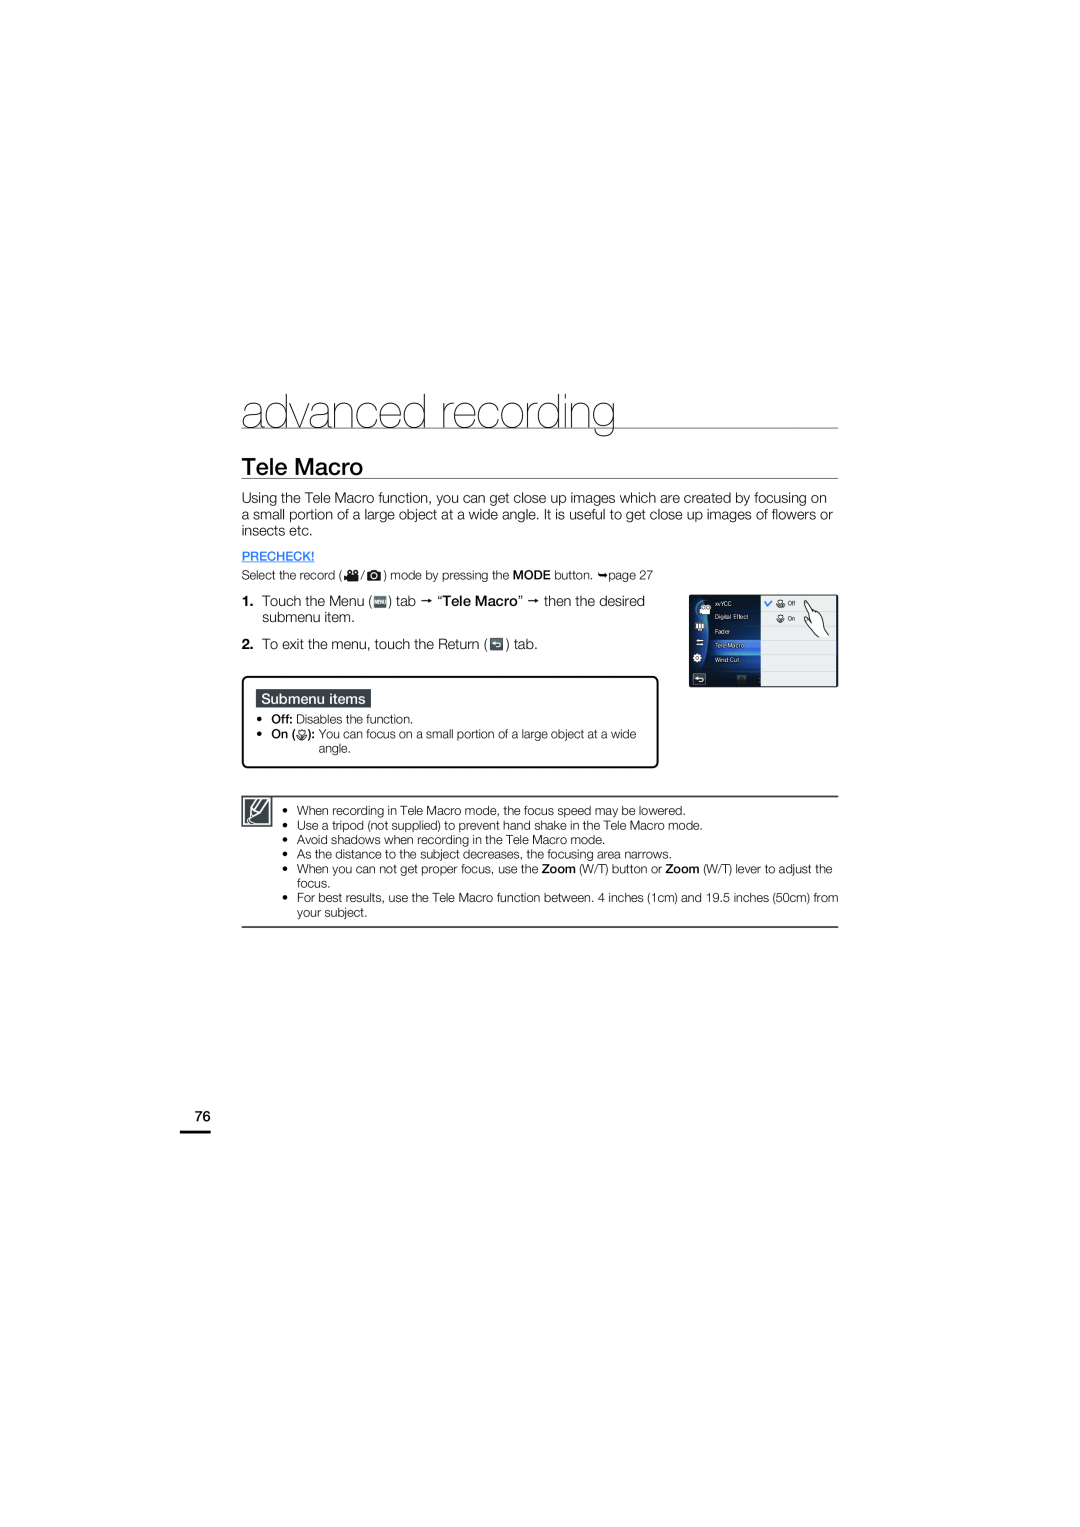 Samsung HMX-S15BN/XAA, HMX-S10BN/XAA manual Tele Macro, advanced recording, Submenu items 